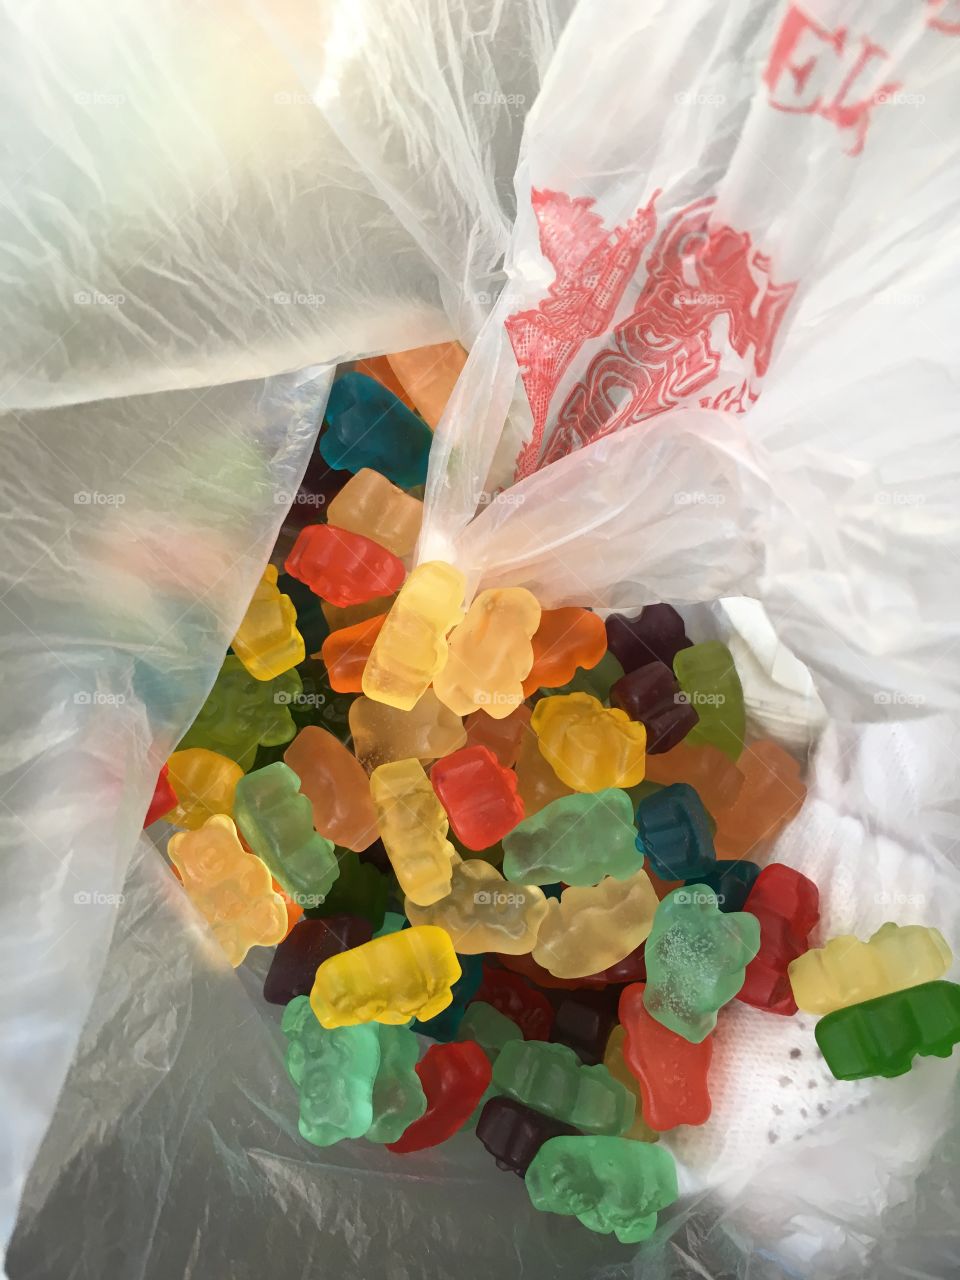 Colorful Gummi Bears 